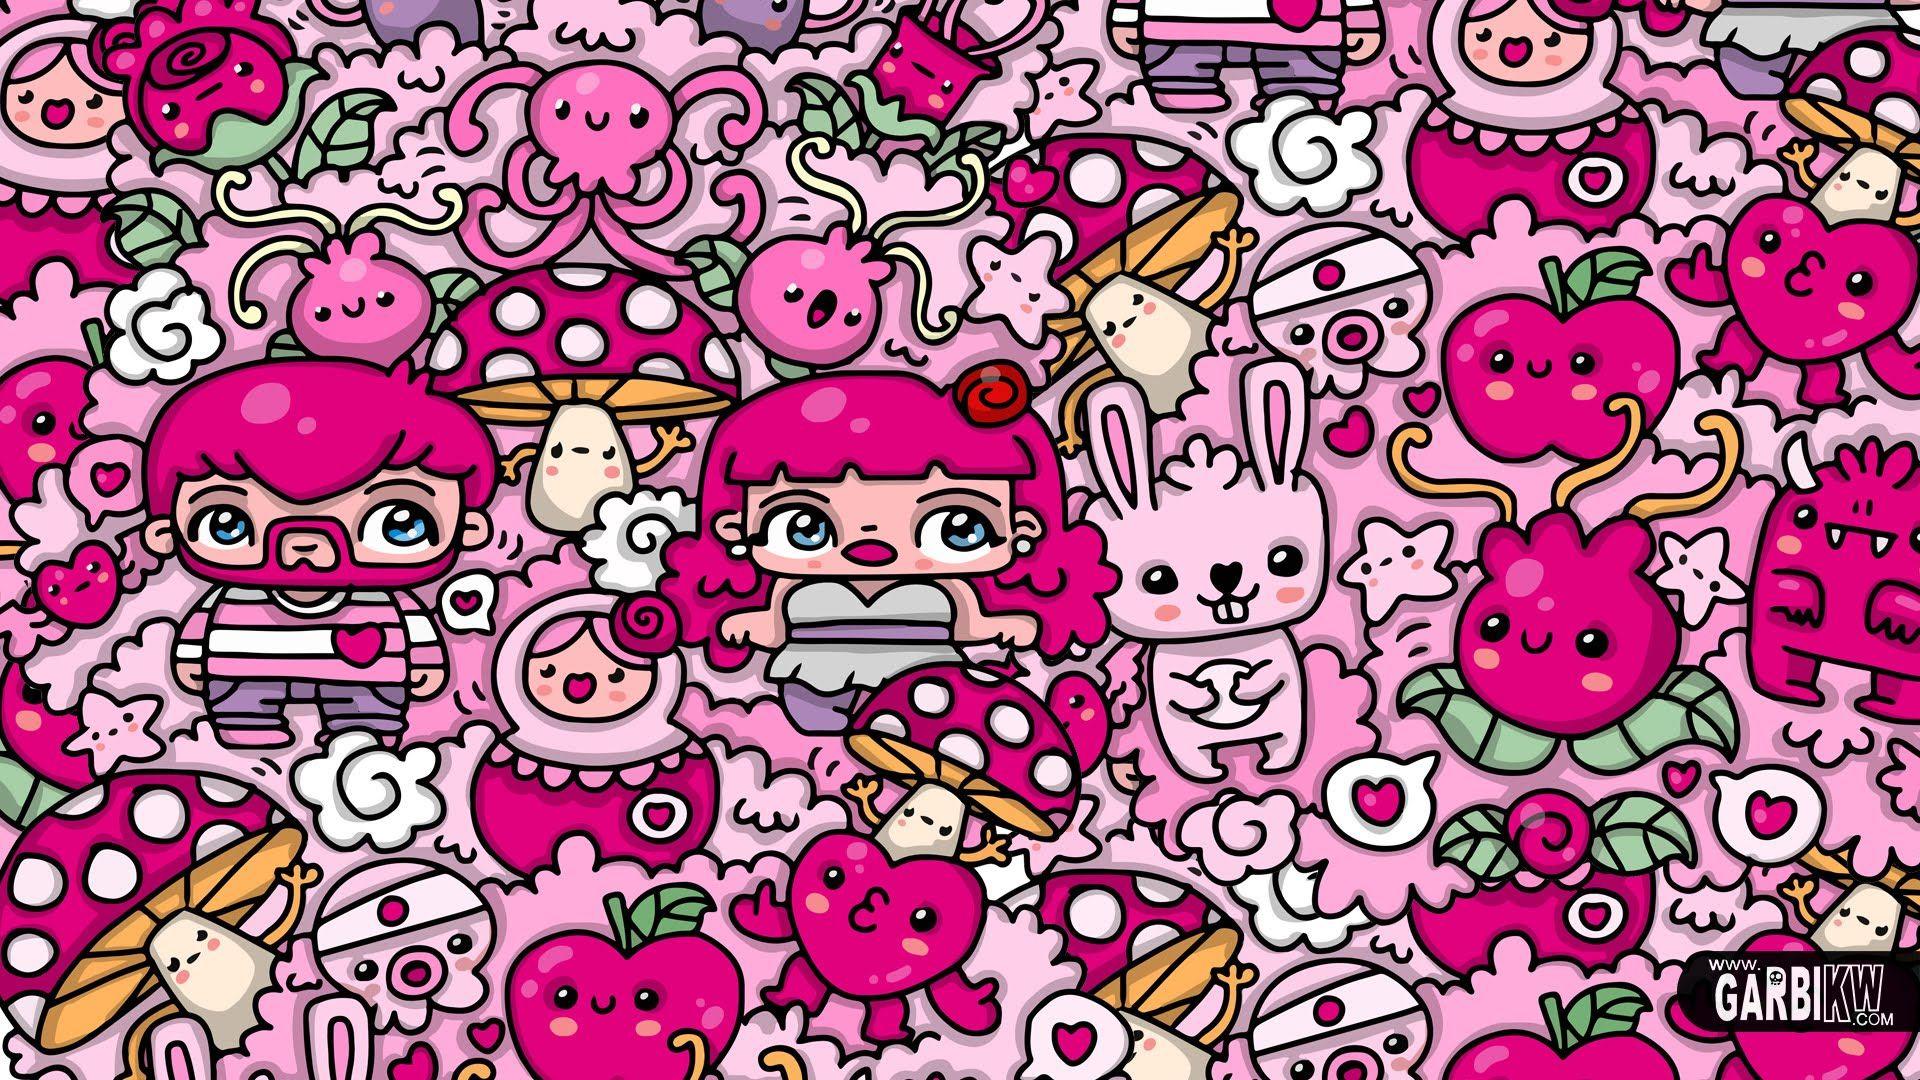 Kawaii Pink - #Kawaii Graffiti and Cute Doodles